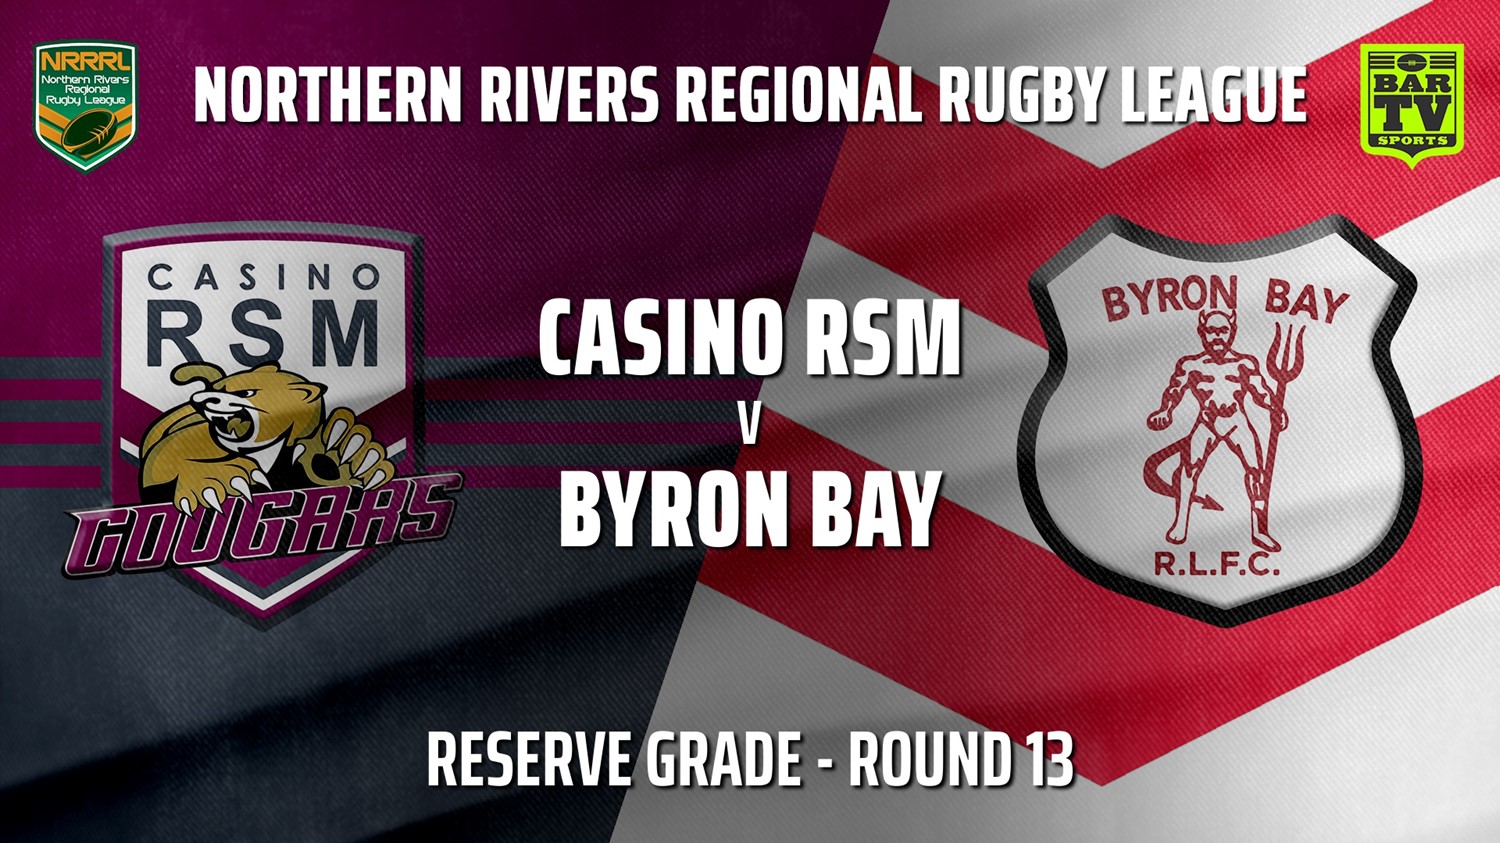 210801-Northern Rivers Round 13 - Reserve Grade - Casino RSM Cougars v Byron Bay Red Devils Slate Image